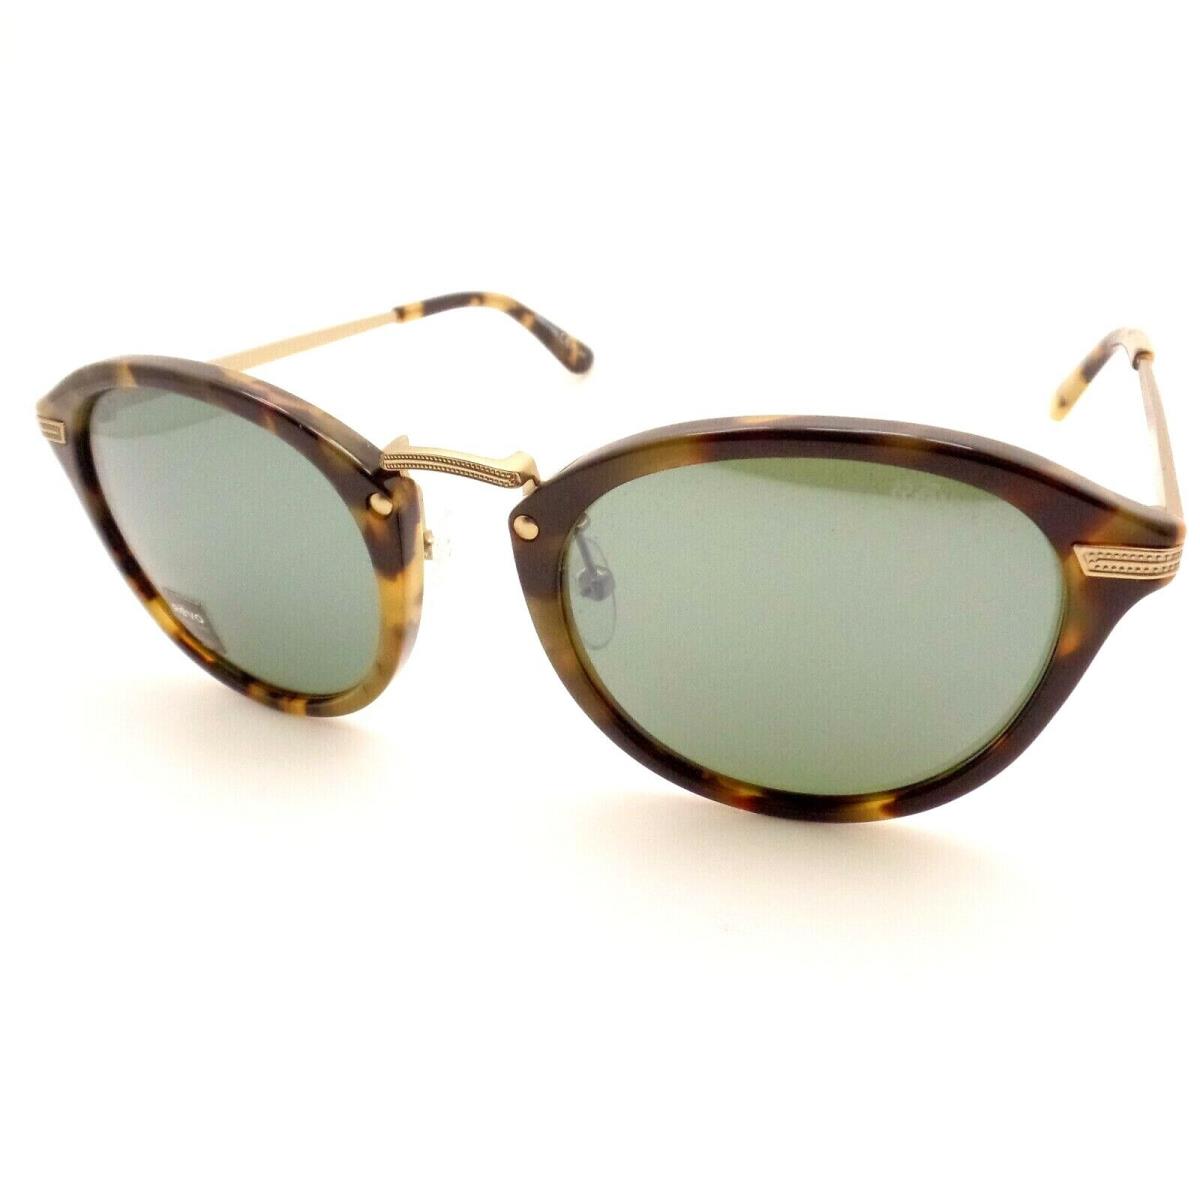 Revo sunglasses Quinn - Tokyo Tort Gold Filigree Frame, Smoky Green Lens